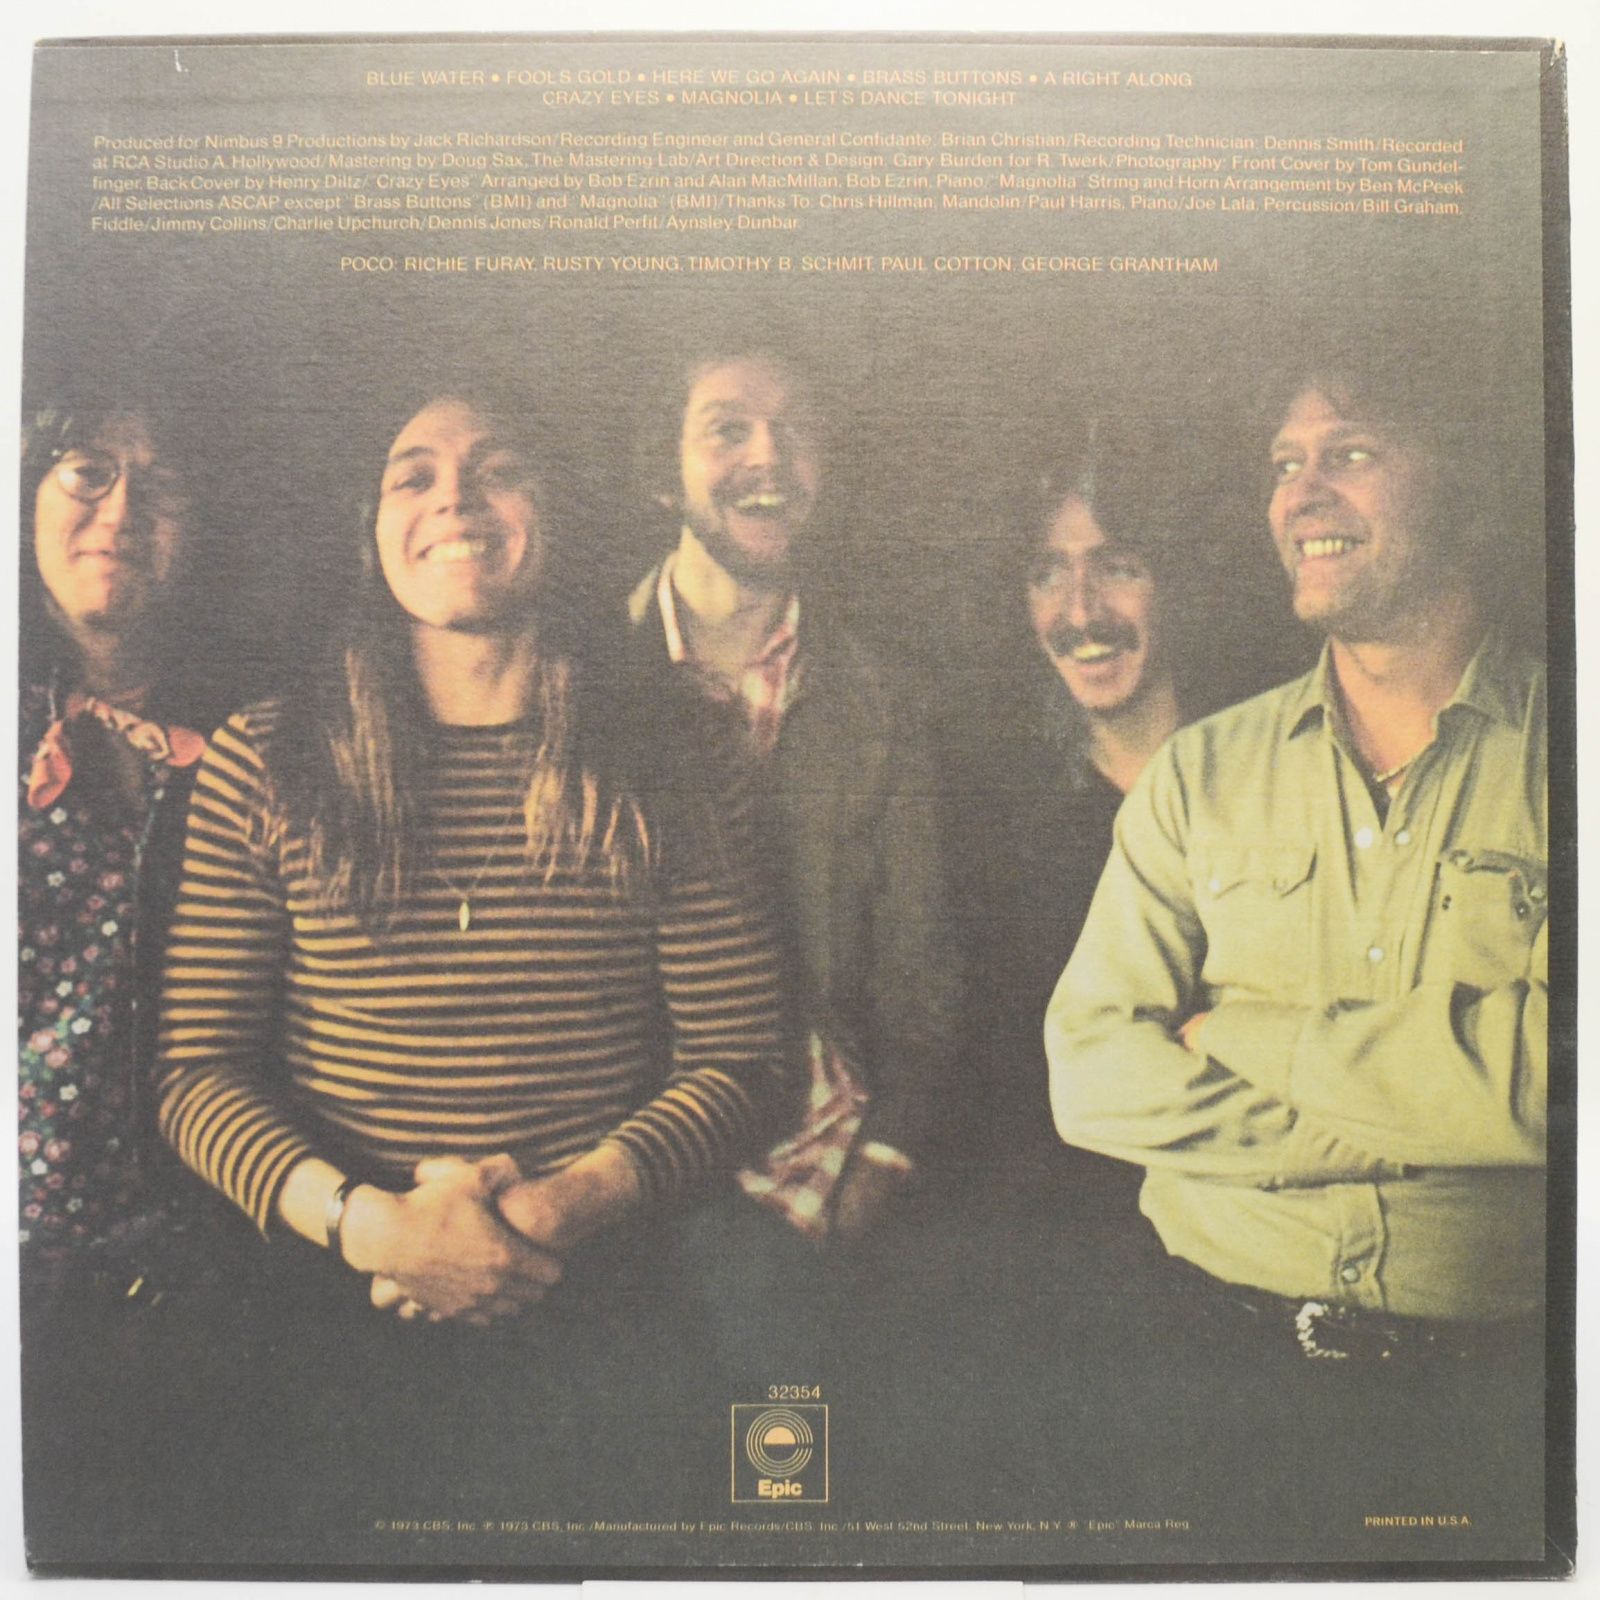 Poco — Crazy Eyes (USA), 1973